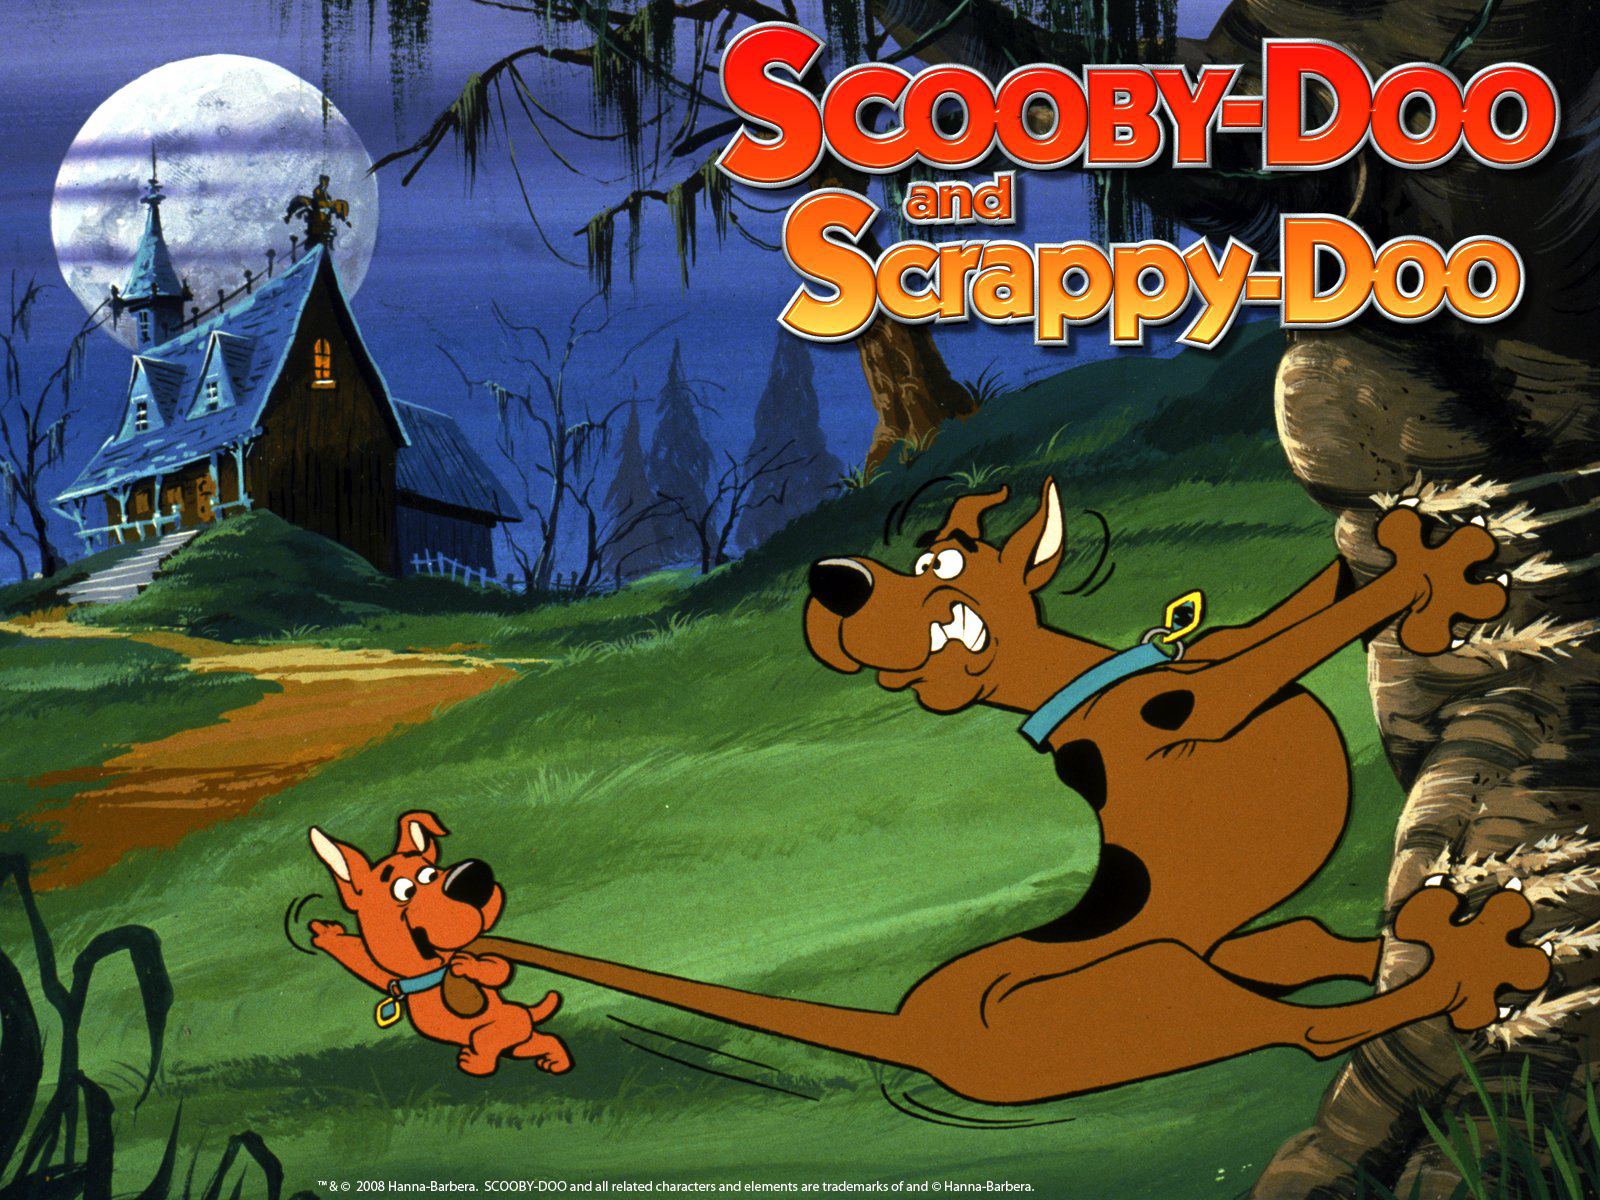 Scooby-Doo and Scrappy-Doo (Phần 4) - Scooby-Doo and Scrappy-Doo (Season 4)